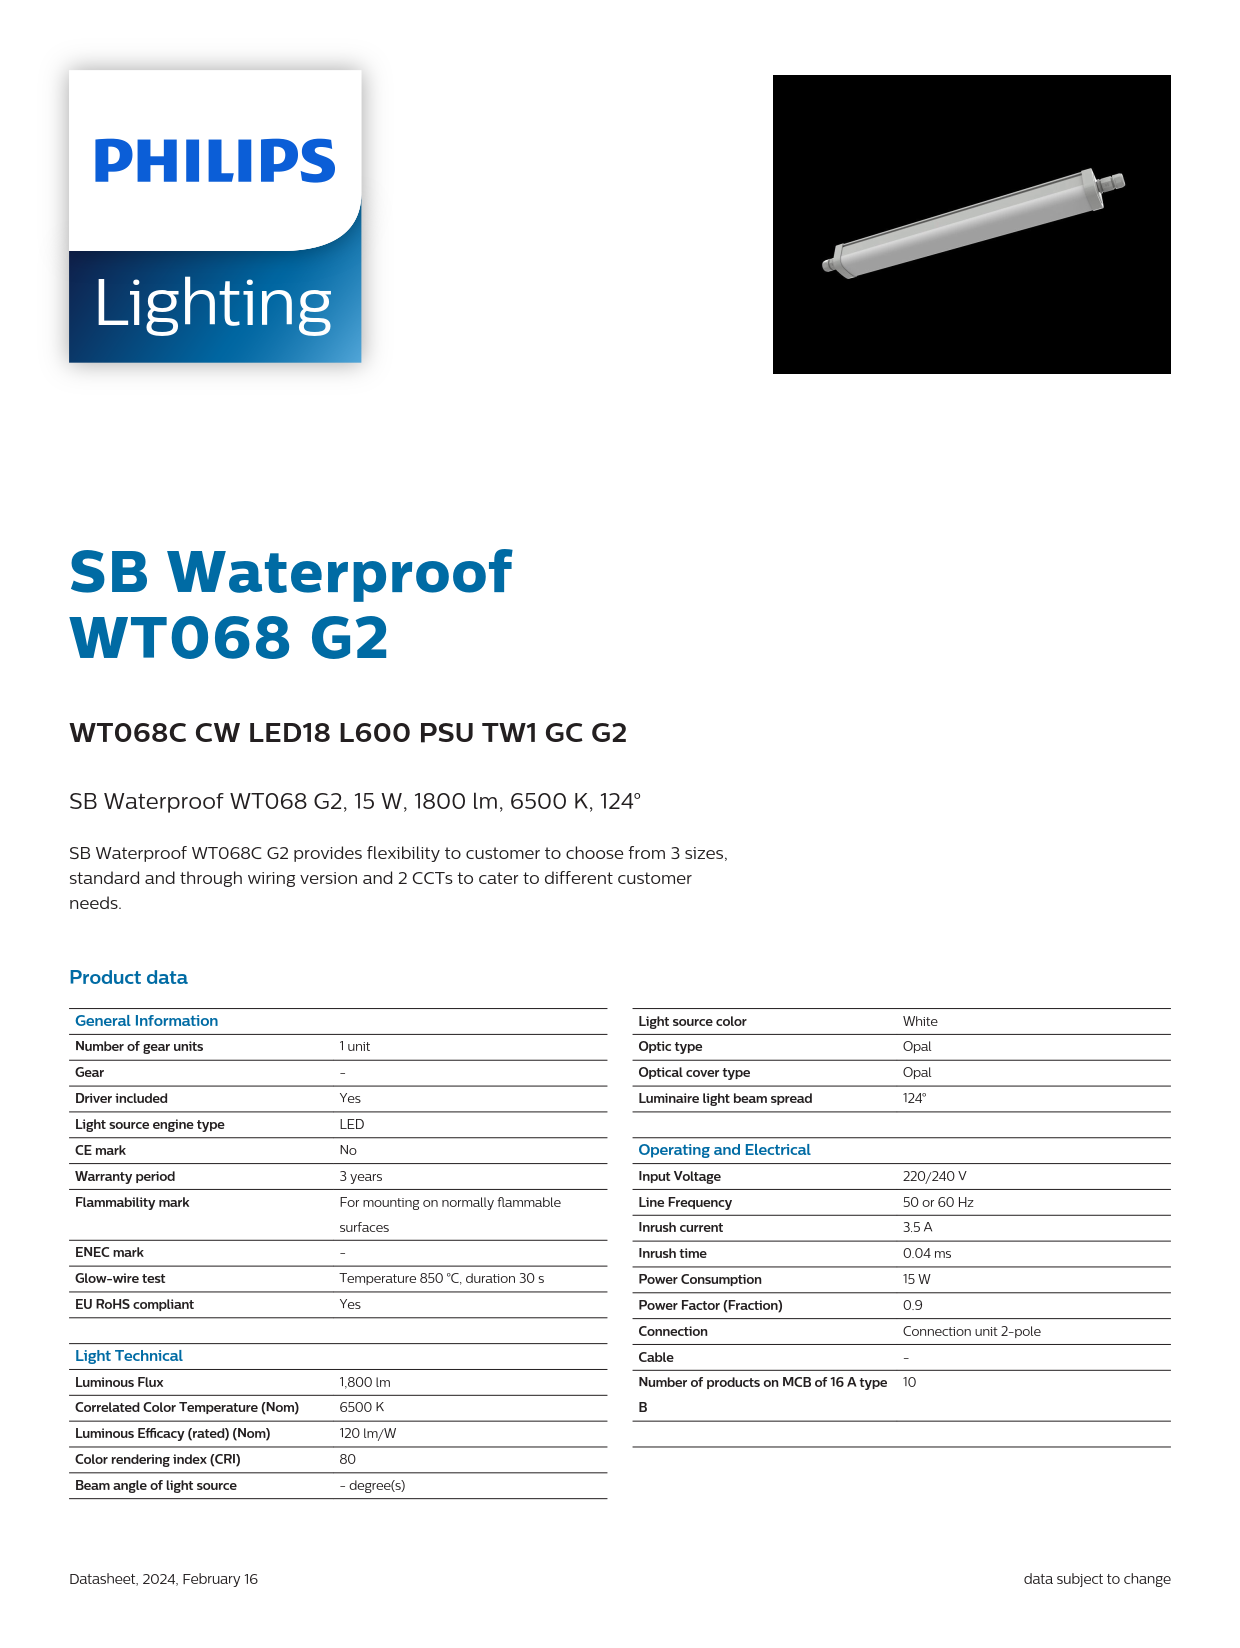 PHILIPS Waterproof Fixture light WT068C CW LED18 L600 PSU TW1 GC G2 911401862085